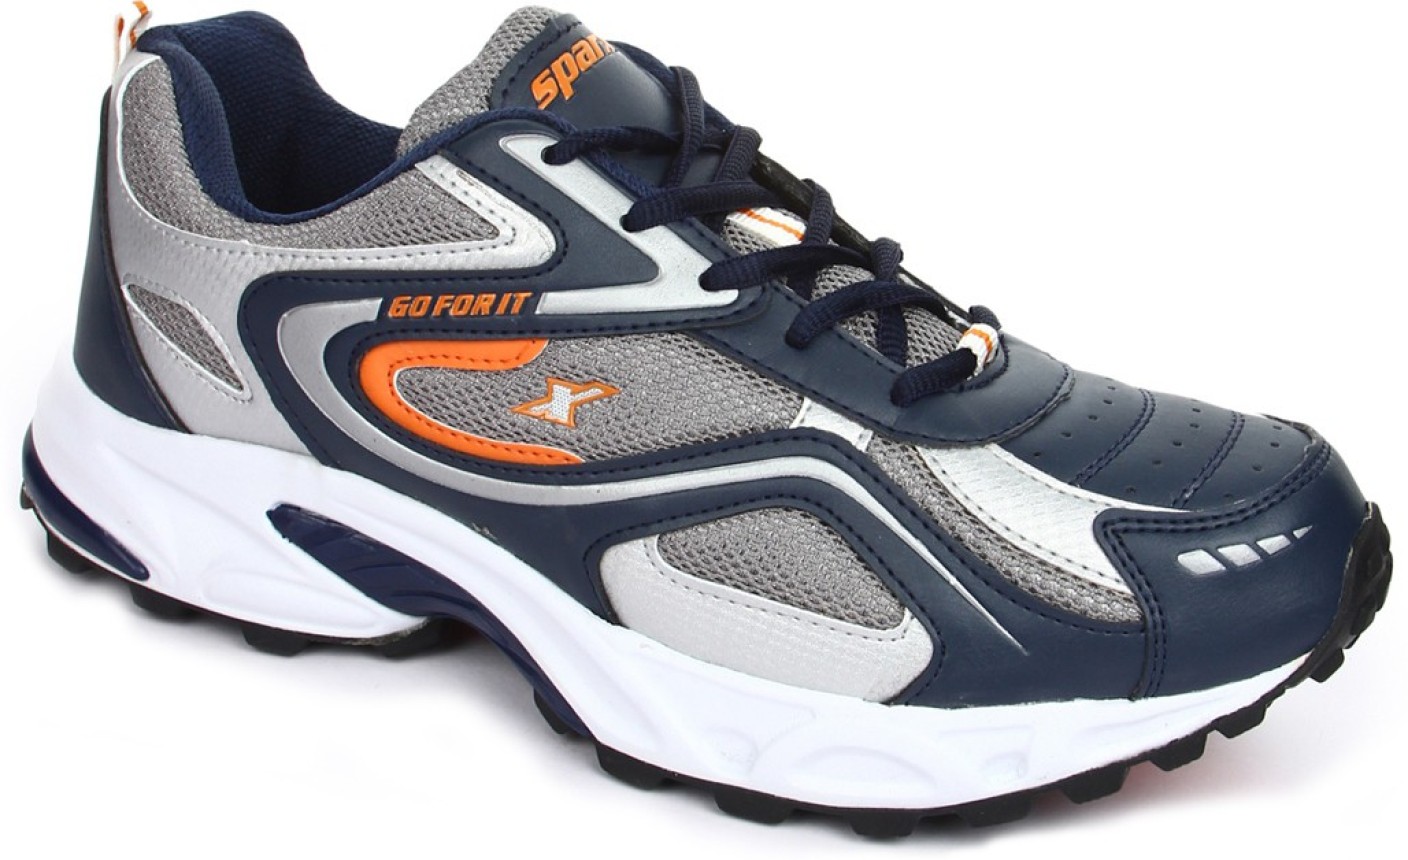 Sparx SM-171 Running Shoes For Men - Buy Nblue-orange Color Sparx SM-171 Running Shoes For Men 